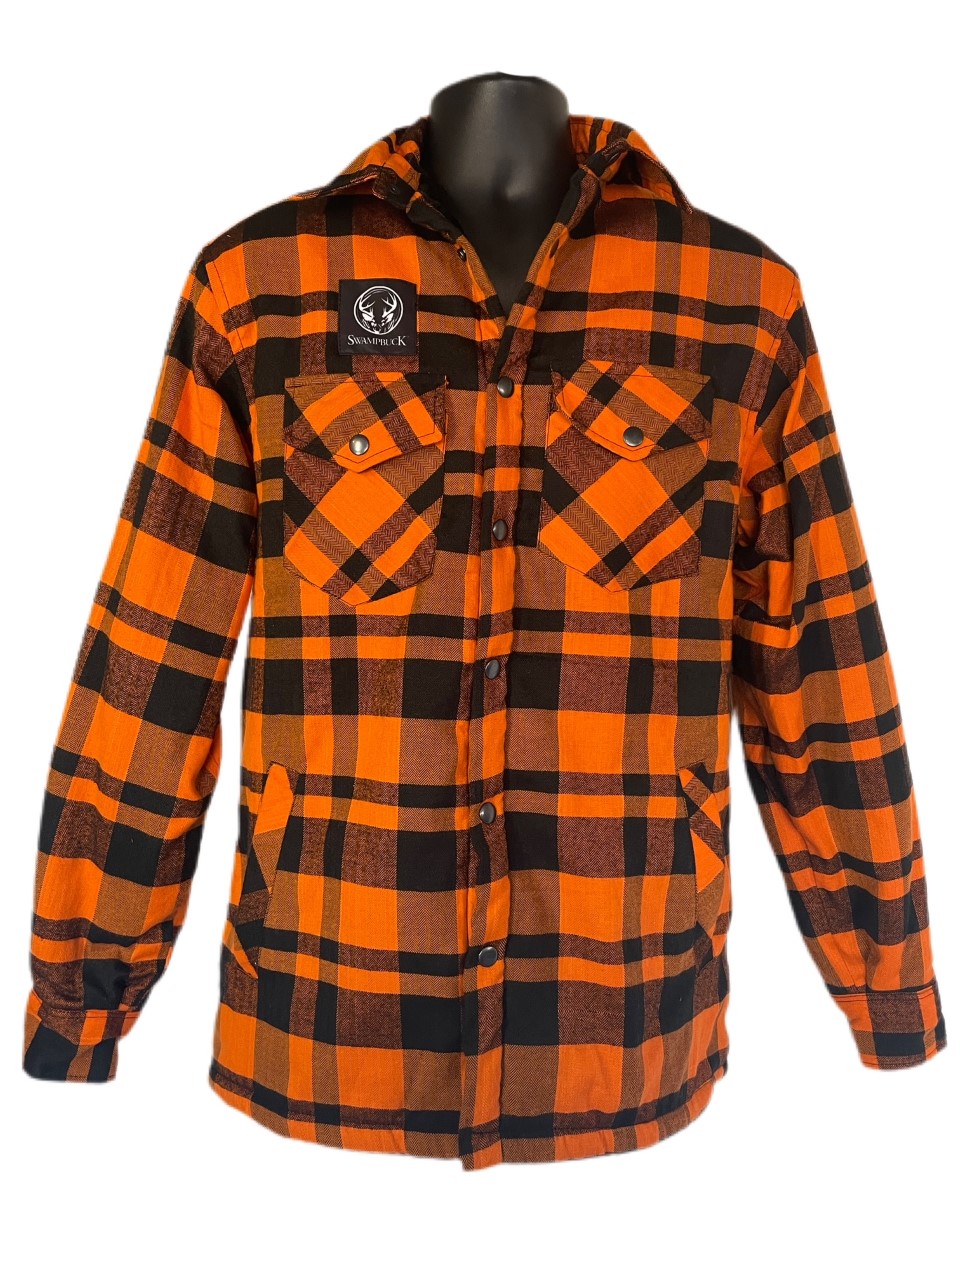 NEW - Blaze Orange Flannel shirt/jacket with Sherpa Lining!